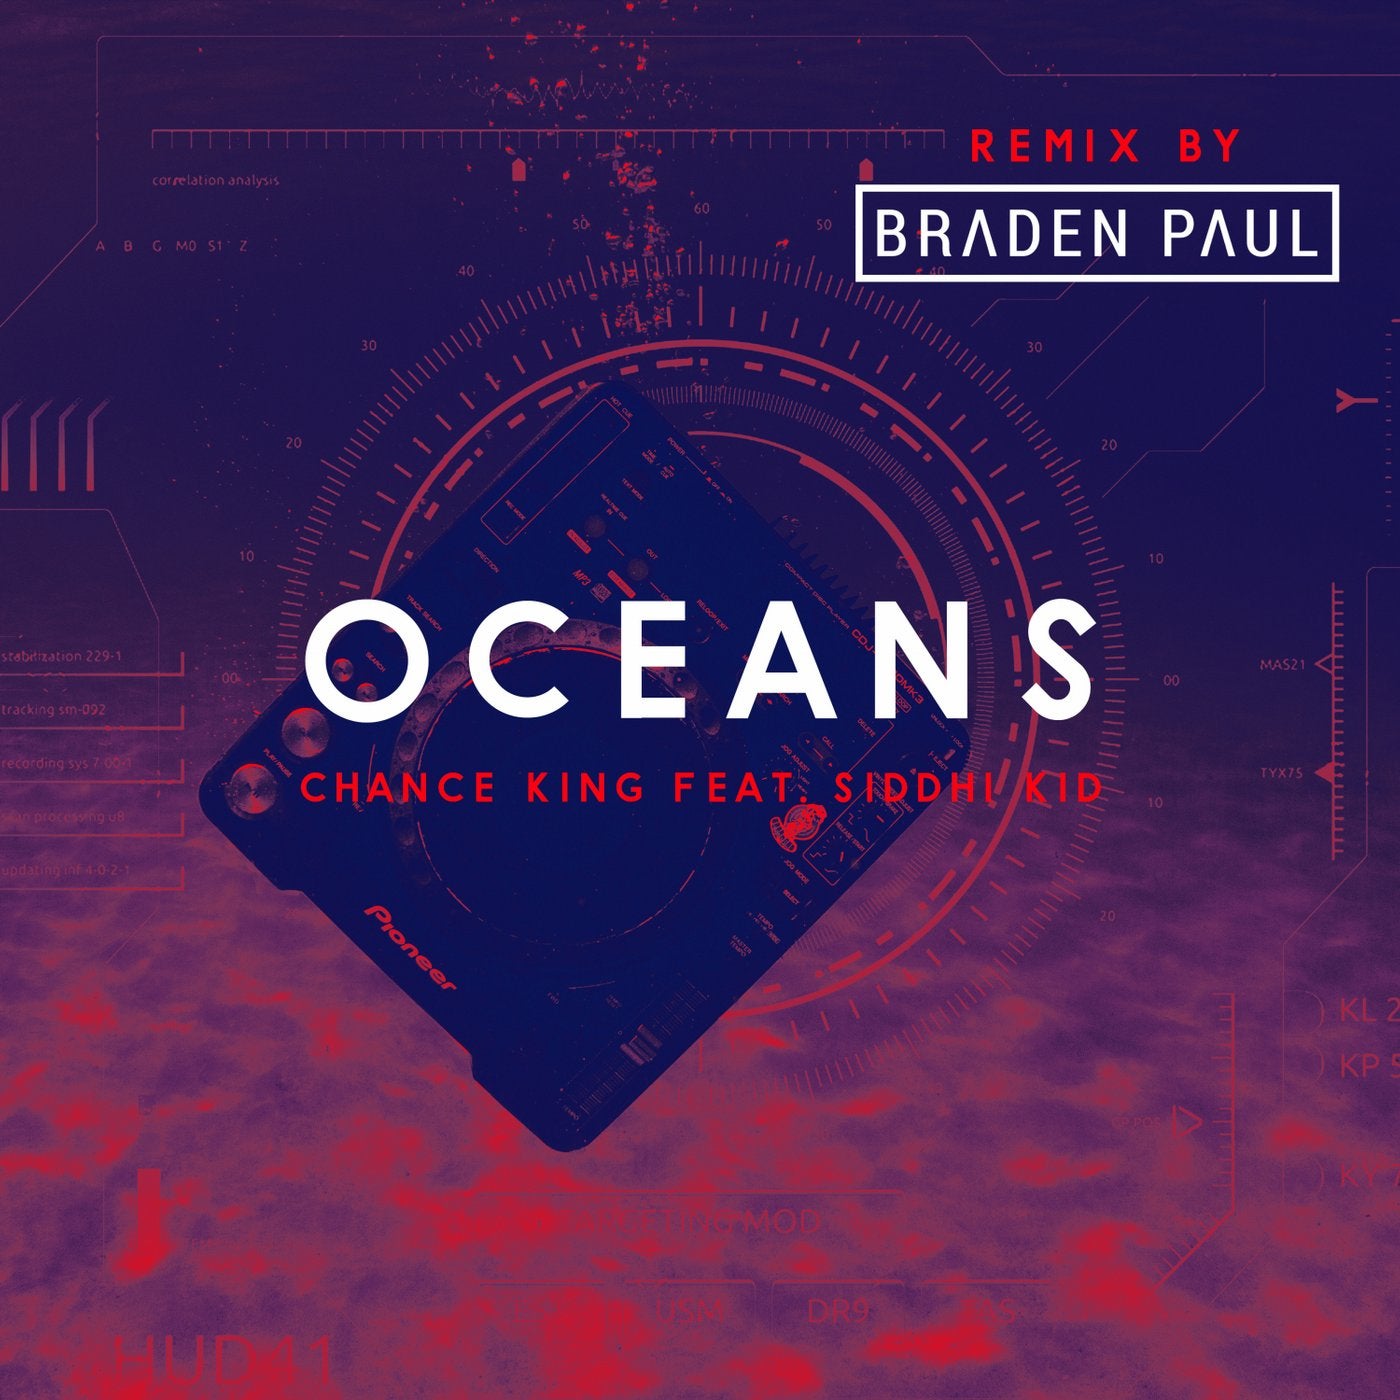 Oceans (feat. SIDDHI KID) [Braden Paul Remix]